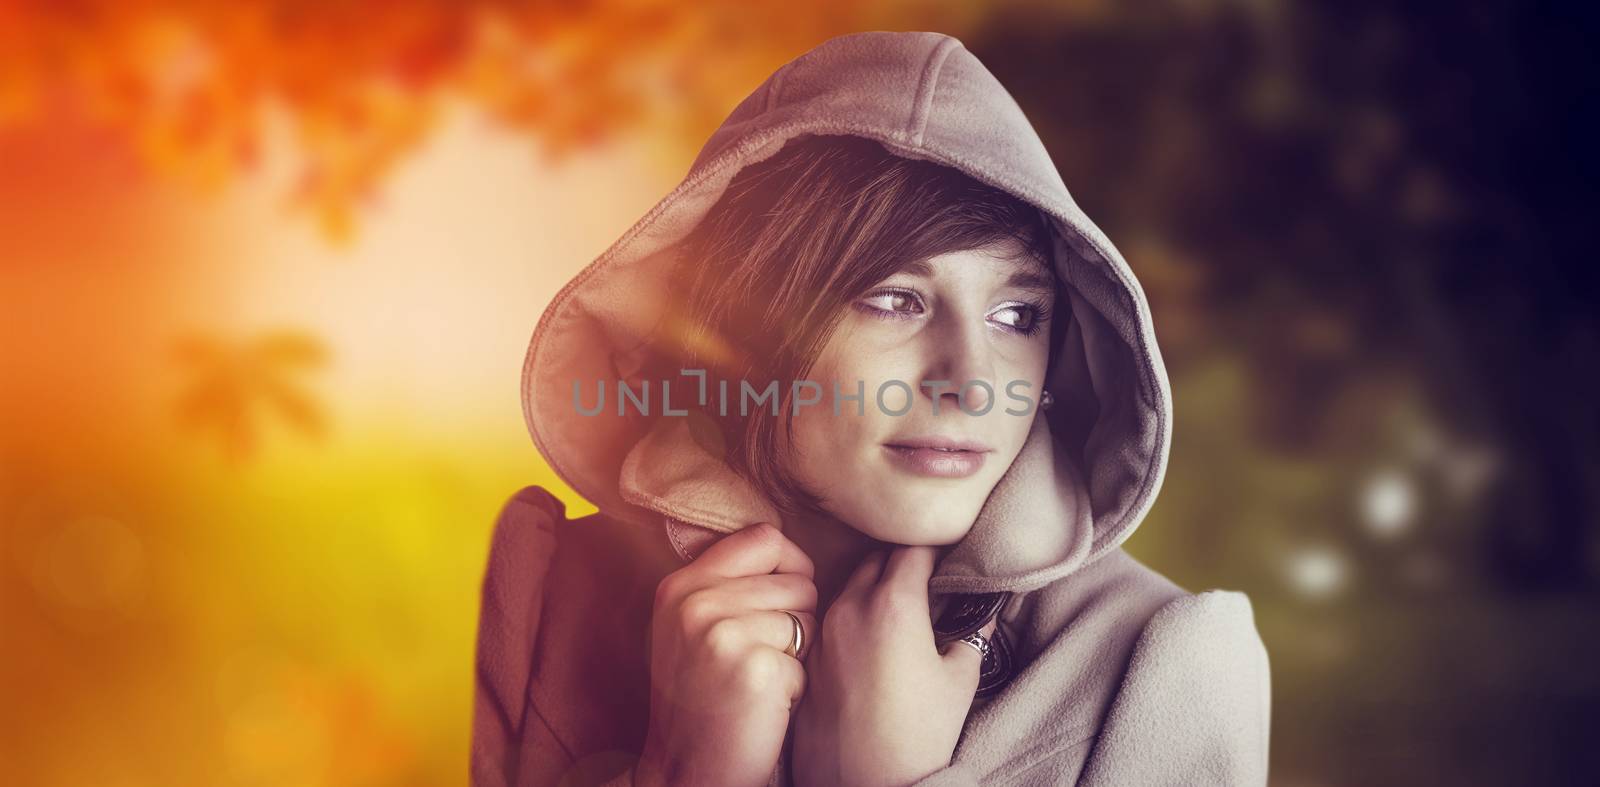 Beautiful woman wearing winter coat looking away against autumn scene